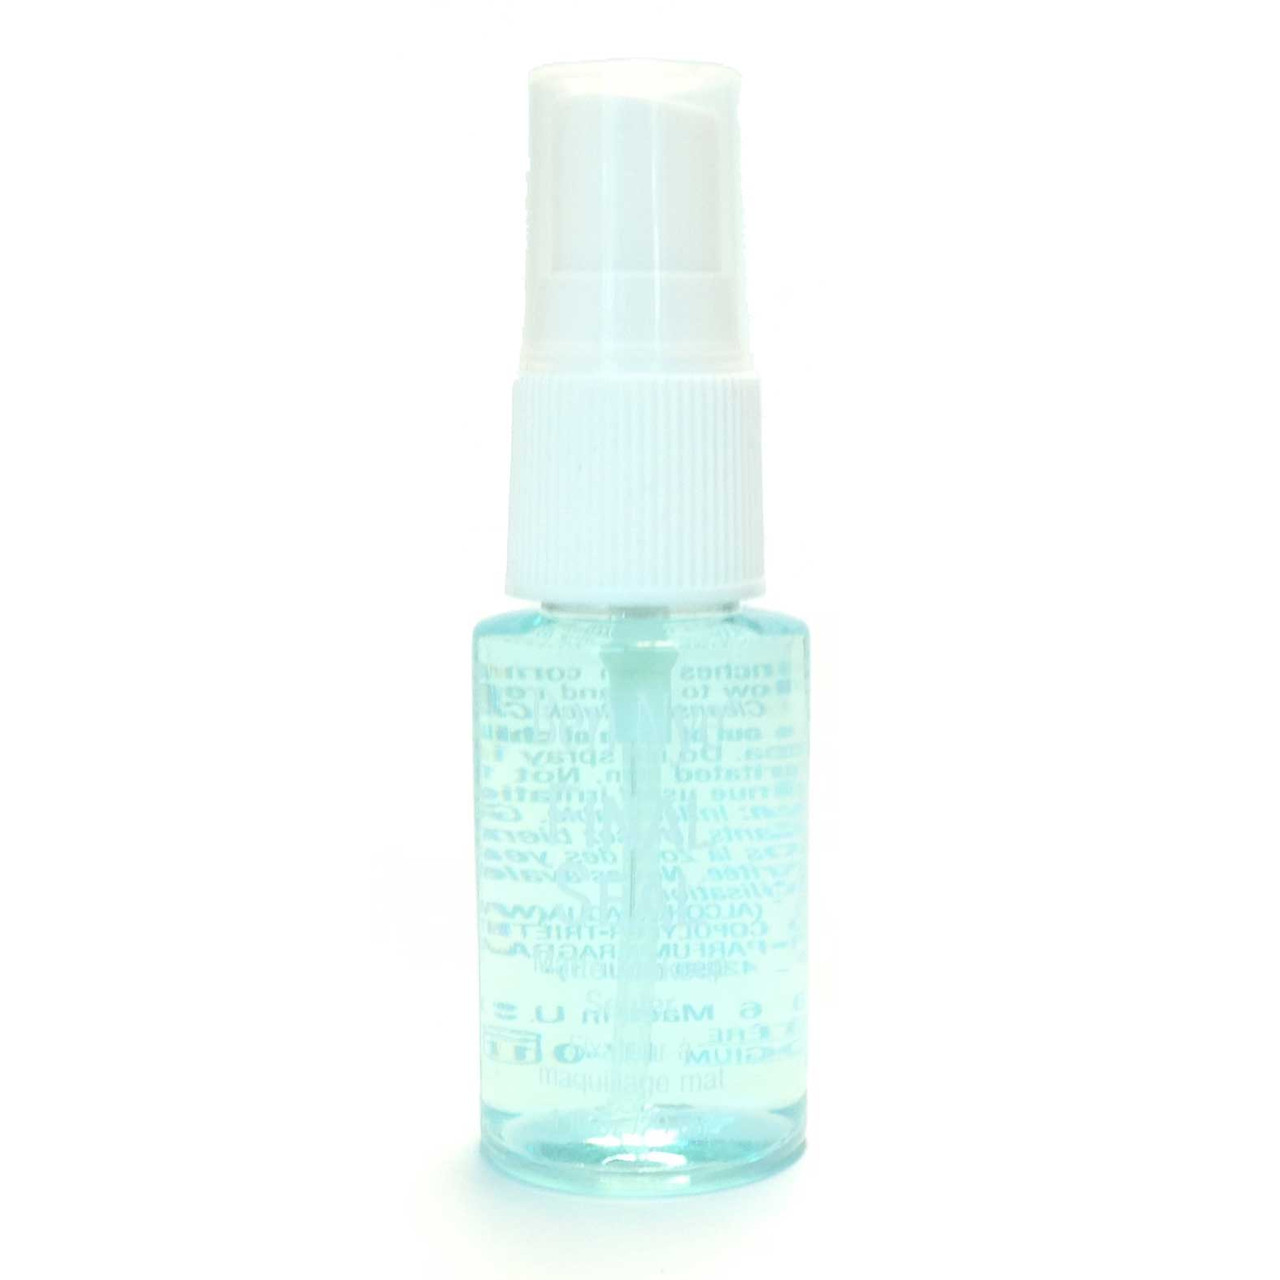 Ben Nye Final Seal Matte Makeup Sealer - 2 oz spray bottle